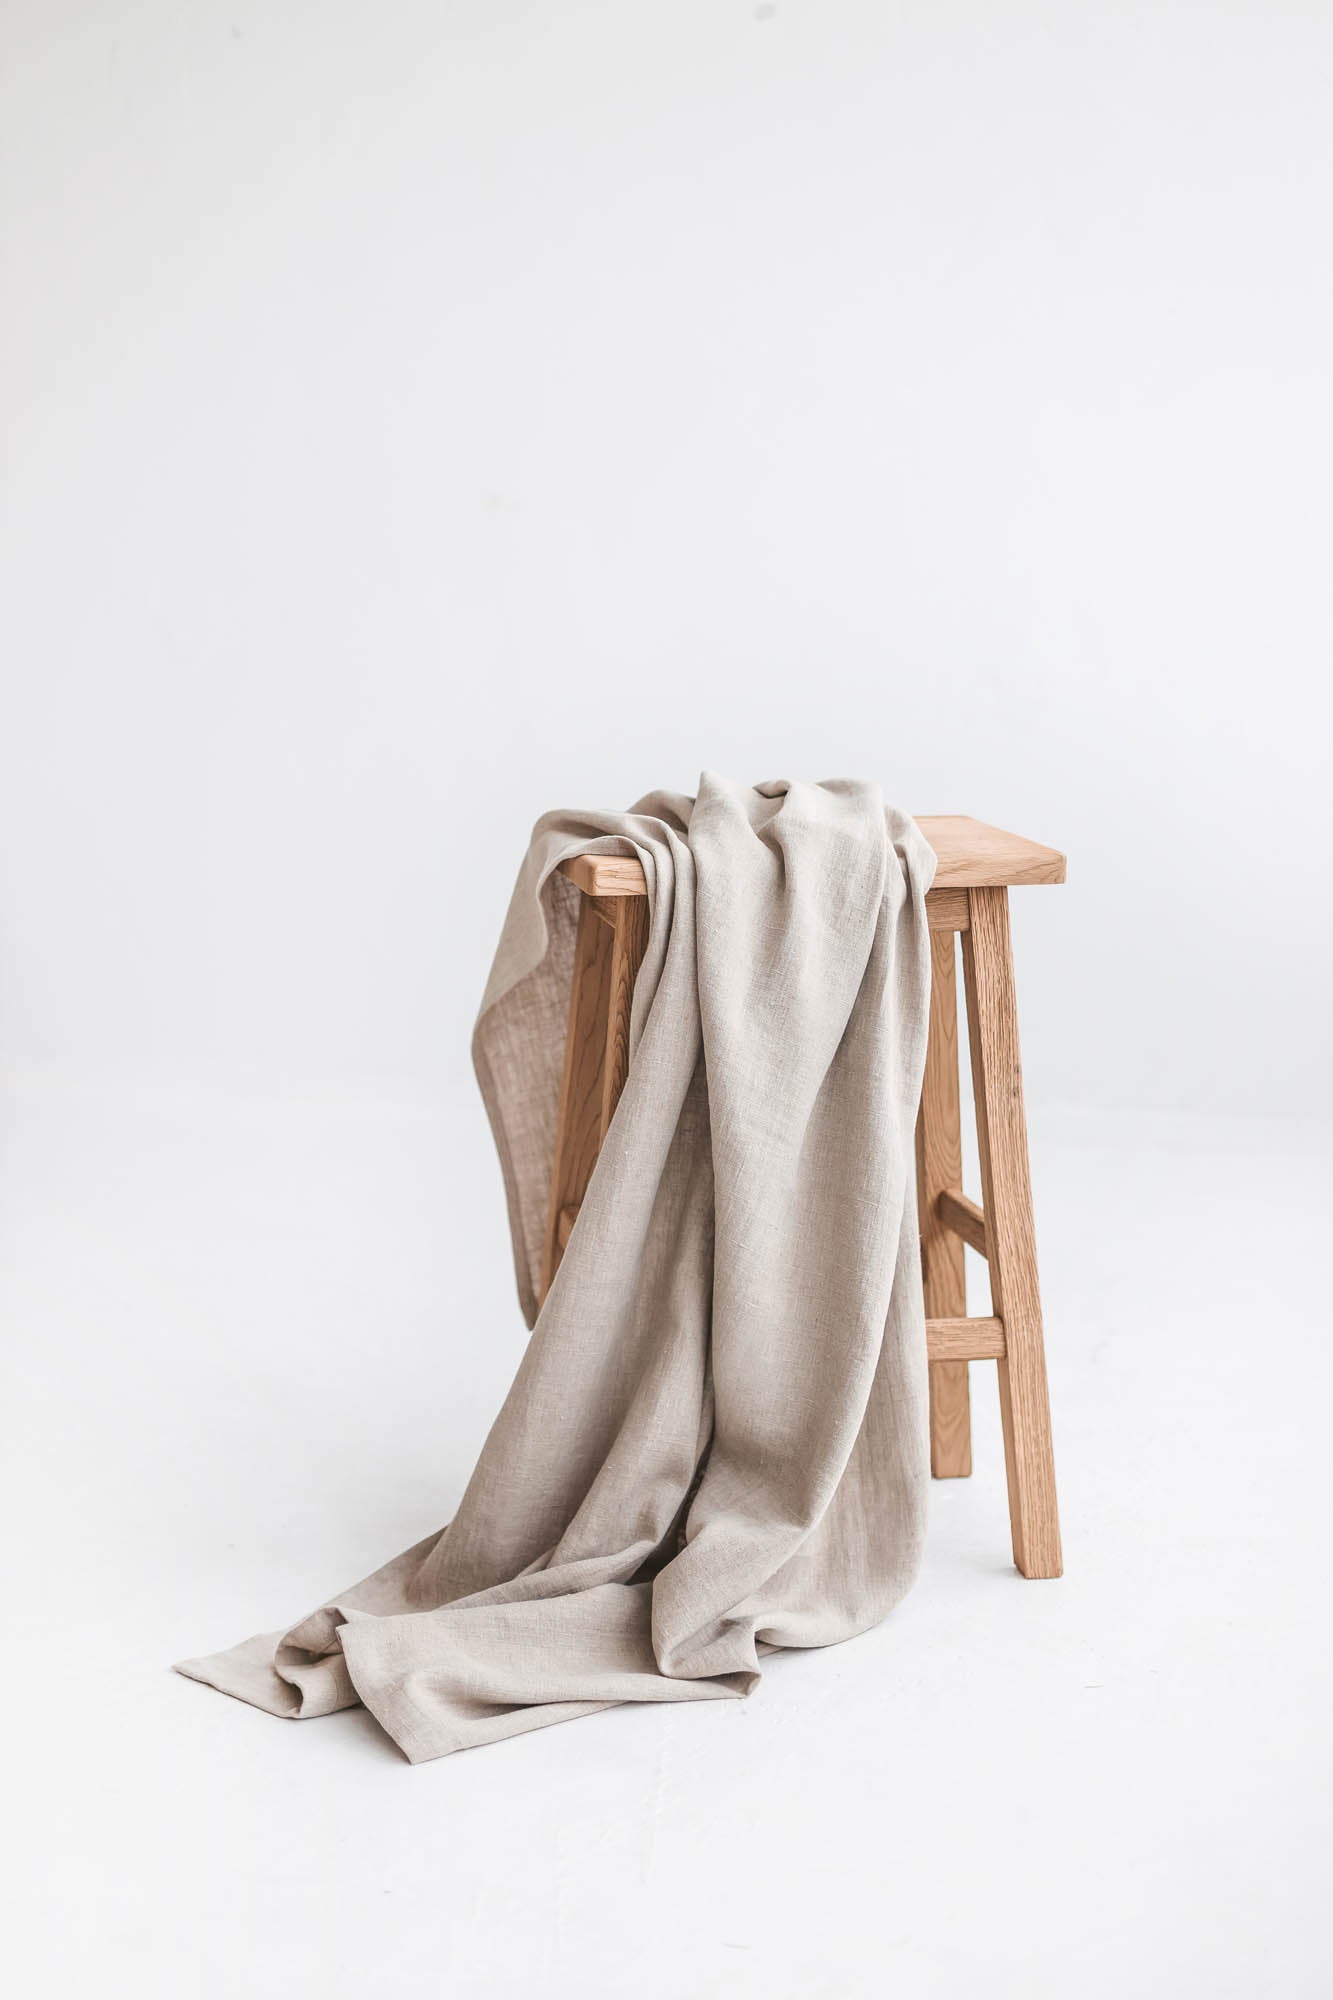 Natural linen throw blanket